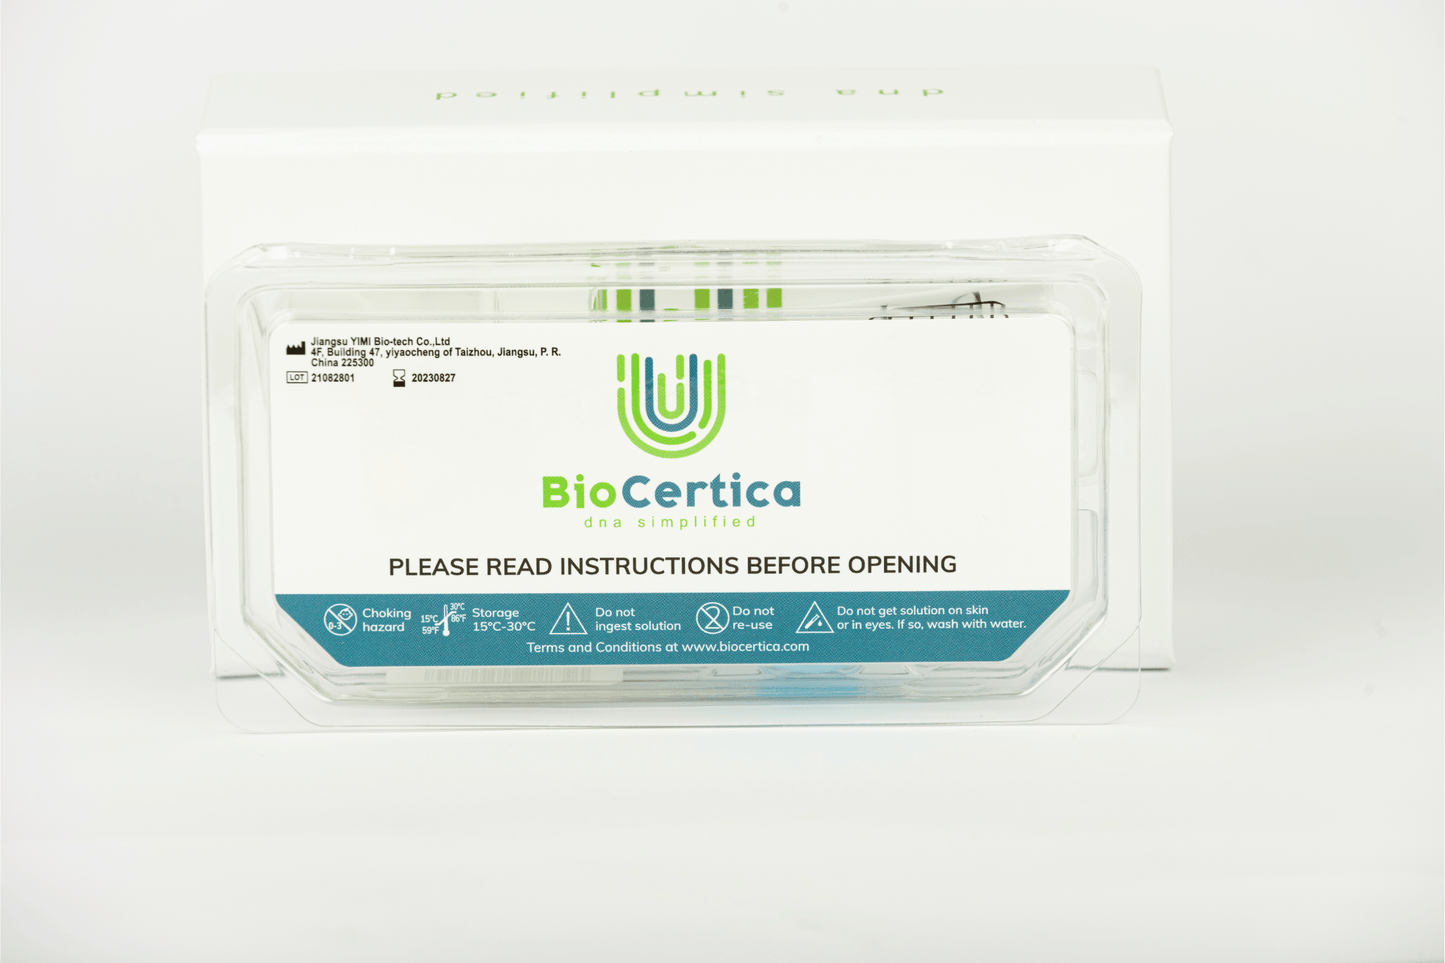 BioCertica collection DNA Pharmacogenetics Test Kit